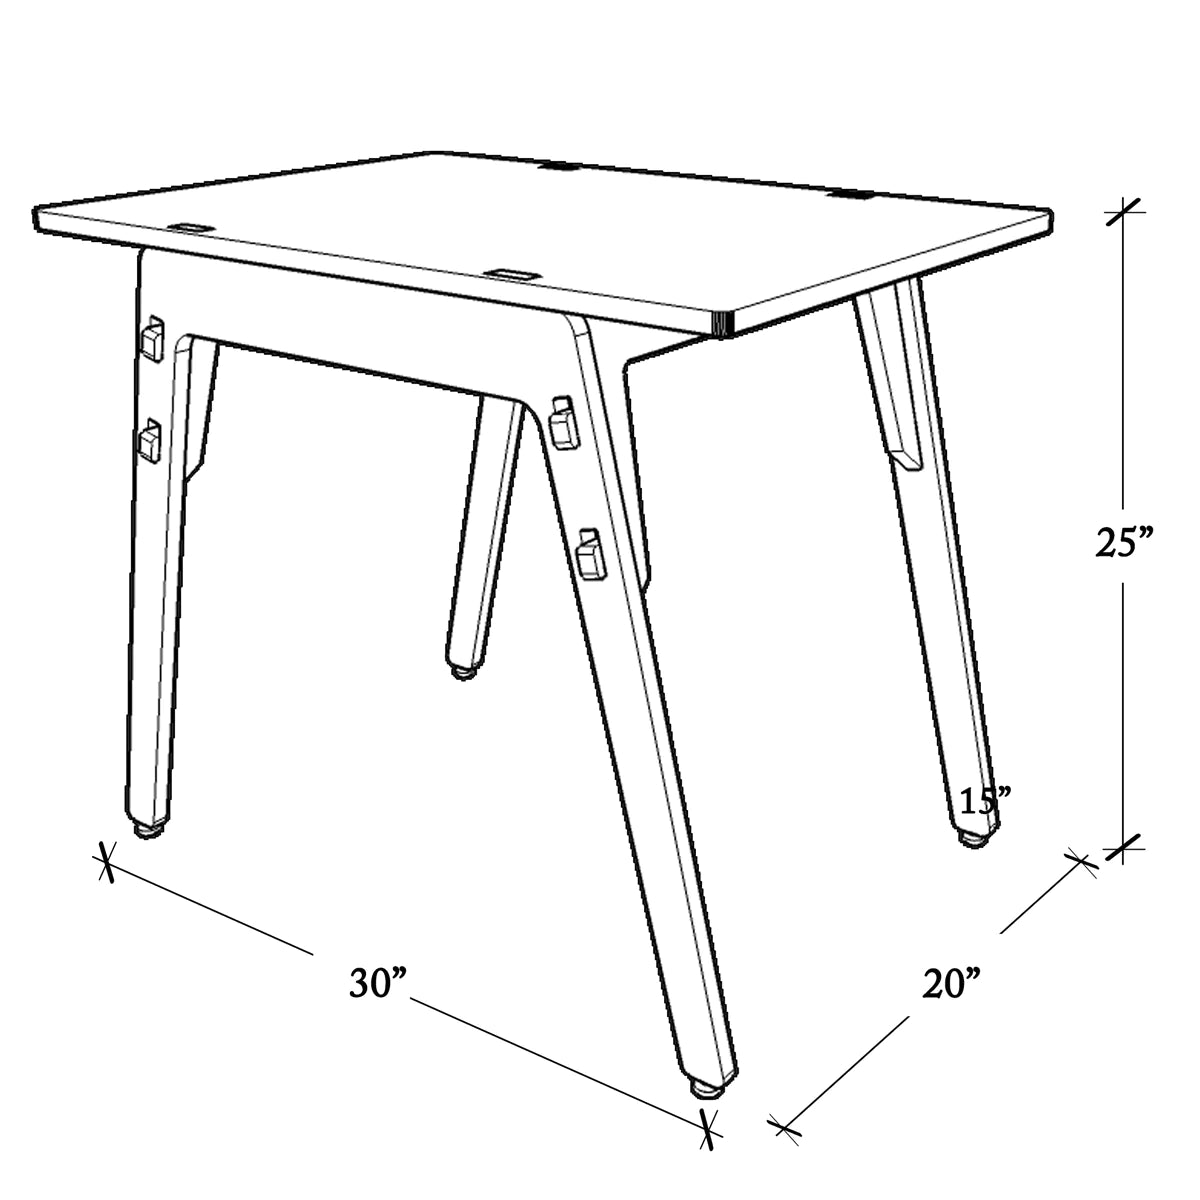 Buy Black Kiwi Wooden Table - Natural - Dimensions - SkilloToys.com